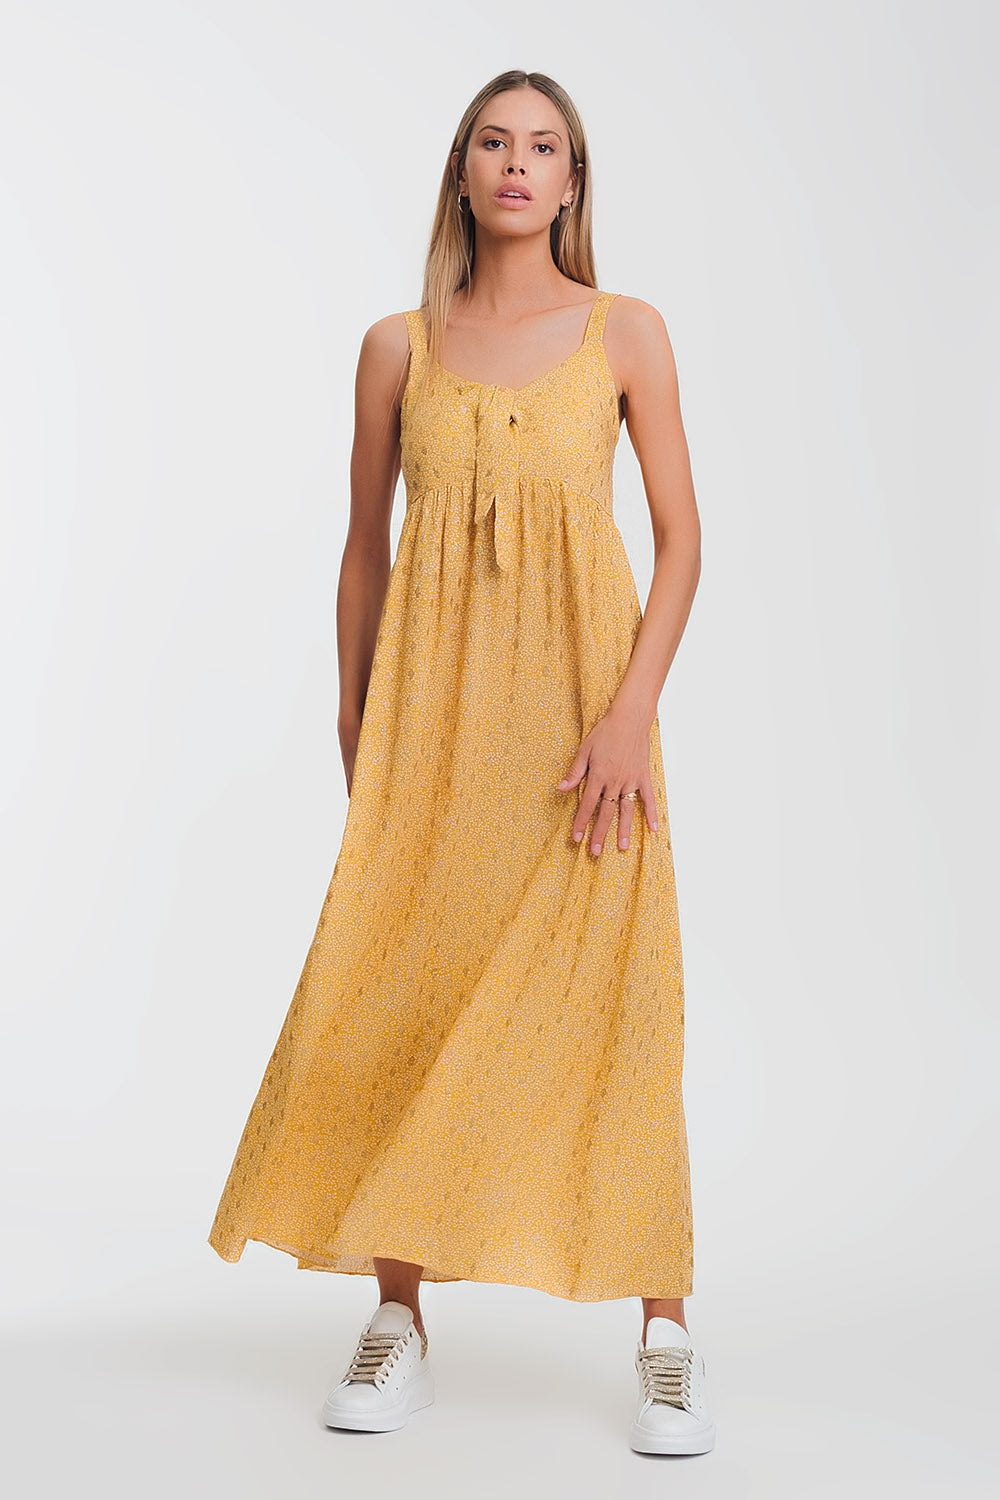 tie front midi yellow dress in floral print Szua Store